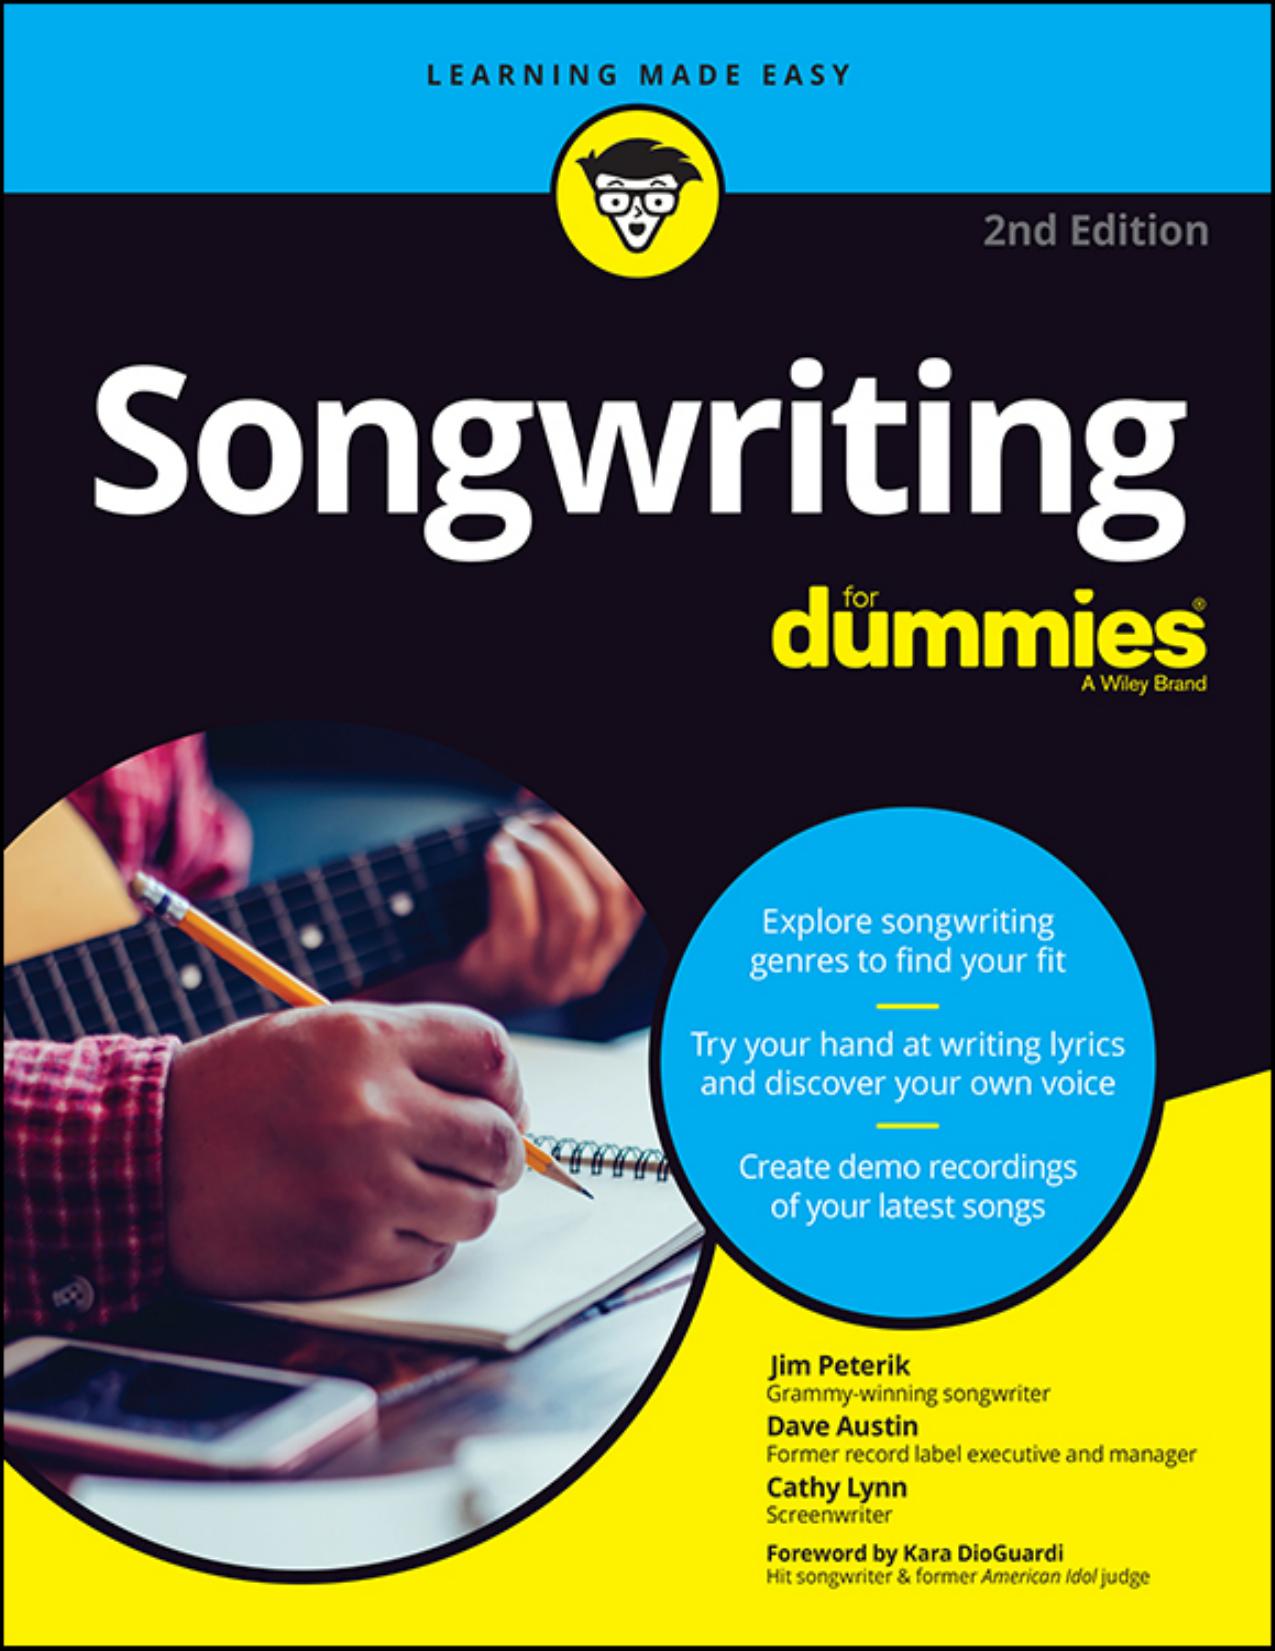 Songwriting For Dummies by Jim Peterik & Dave Austin & Cathy Lynn